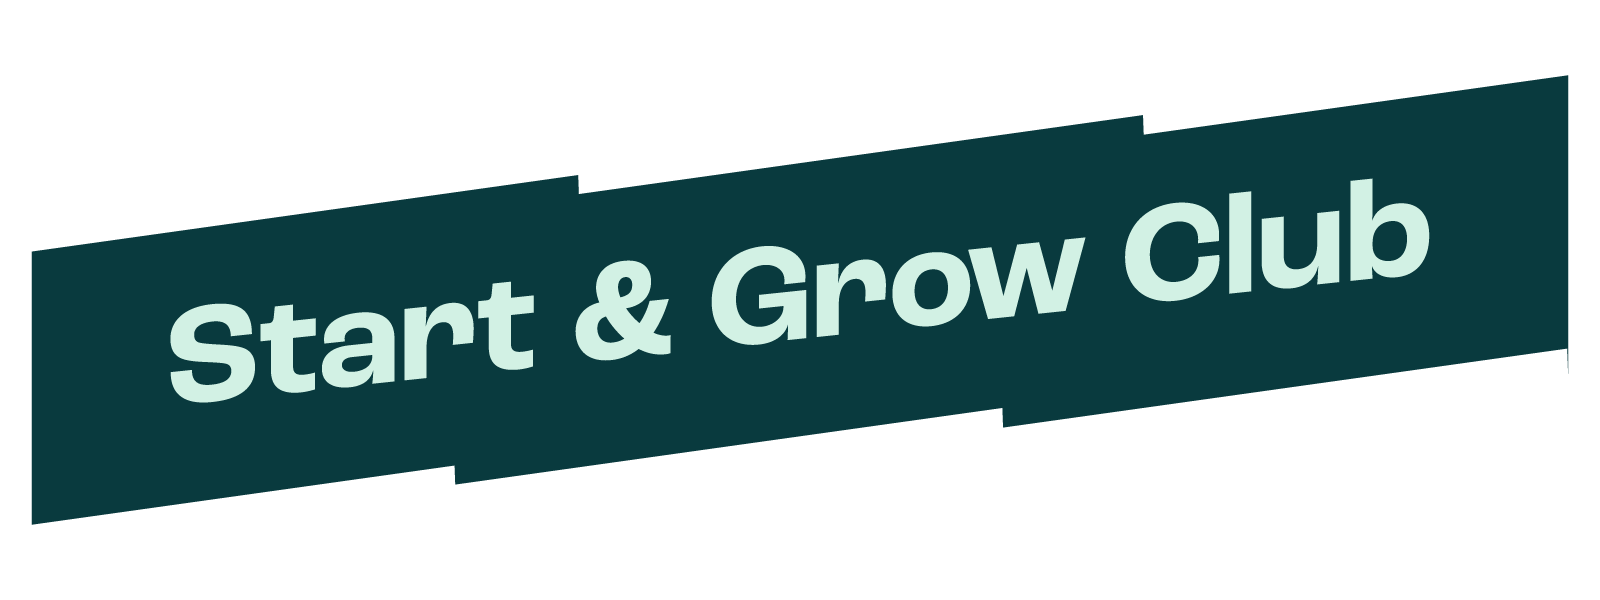 Start & Grow Club Logo